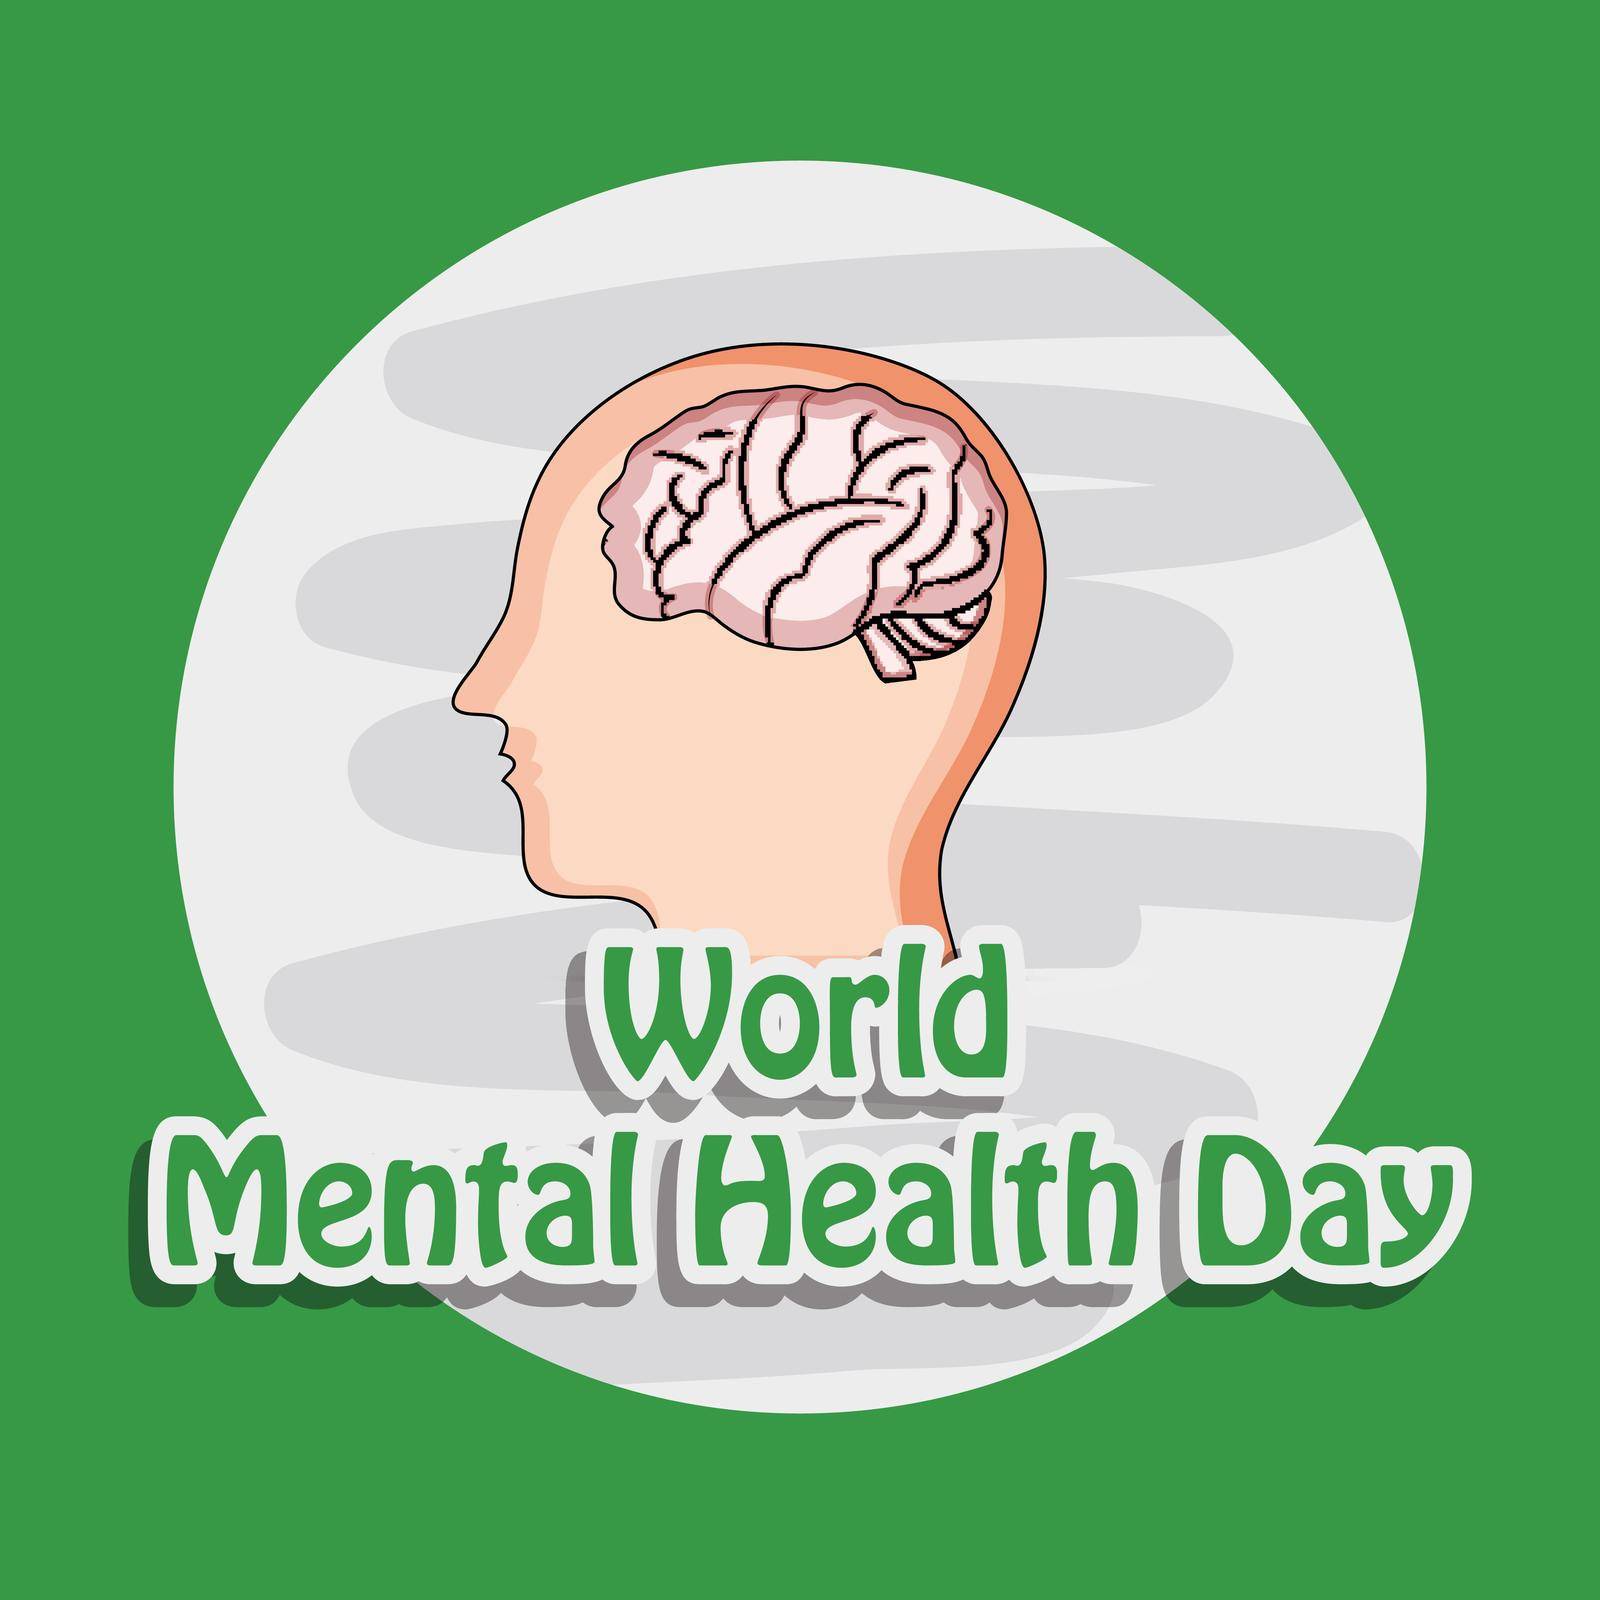 World Mental Health Day Background by vectorworld